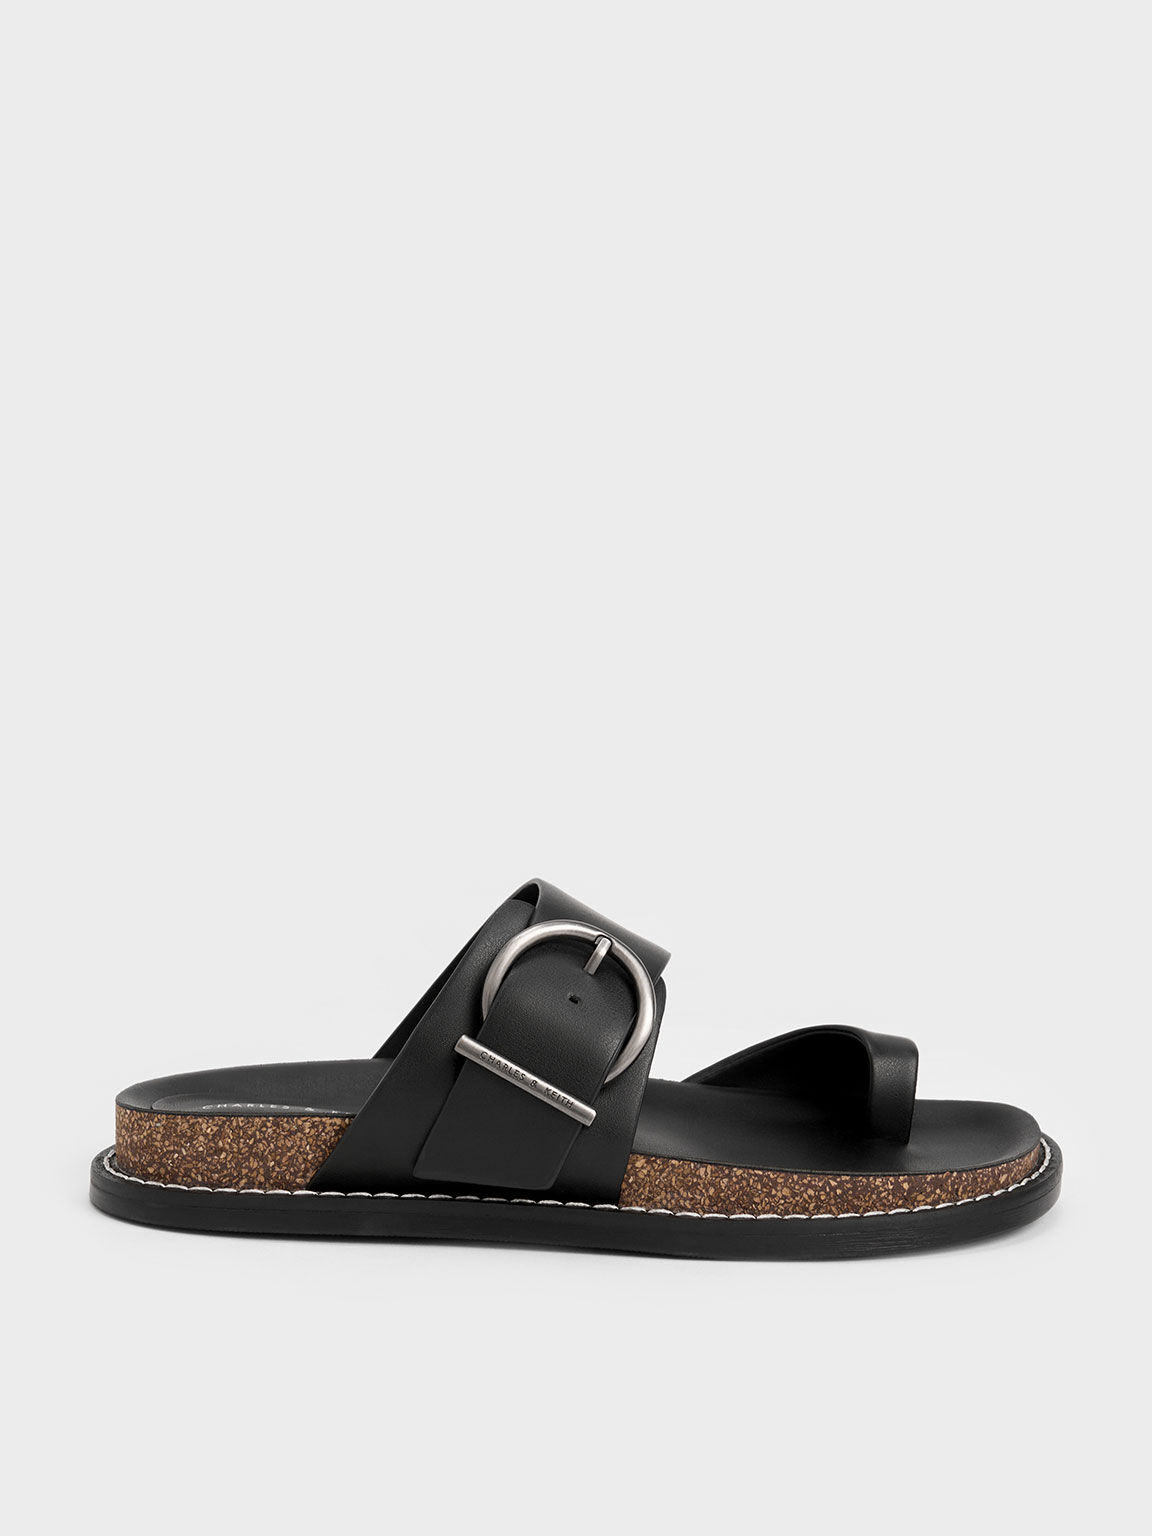 Sandal Toe-Ring Metallic Buckle, Black, hi-res